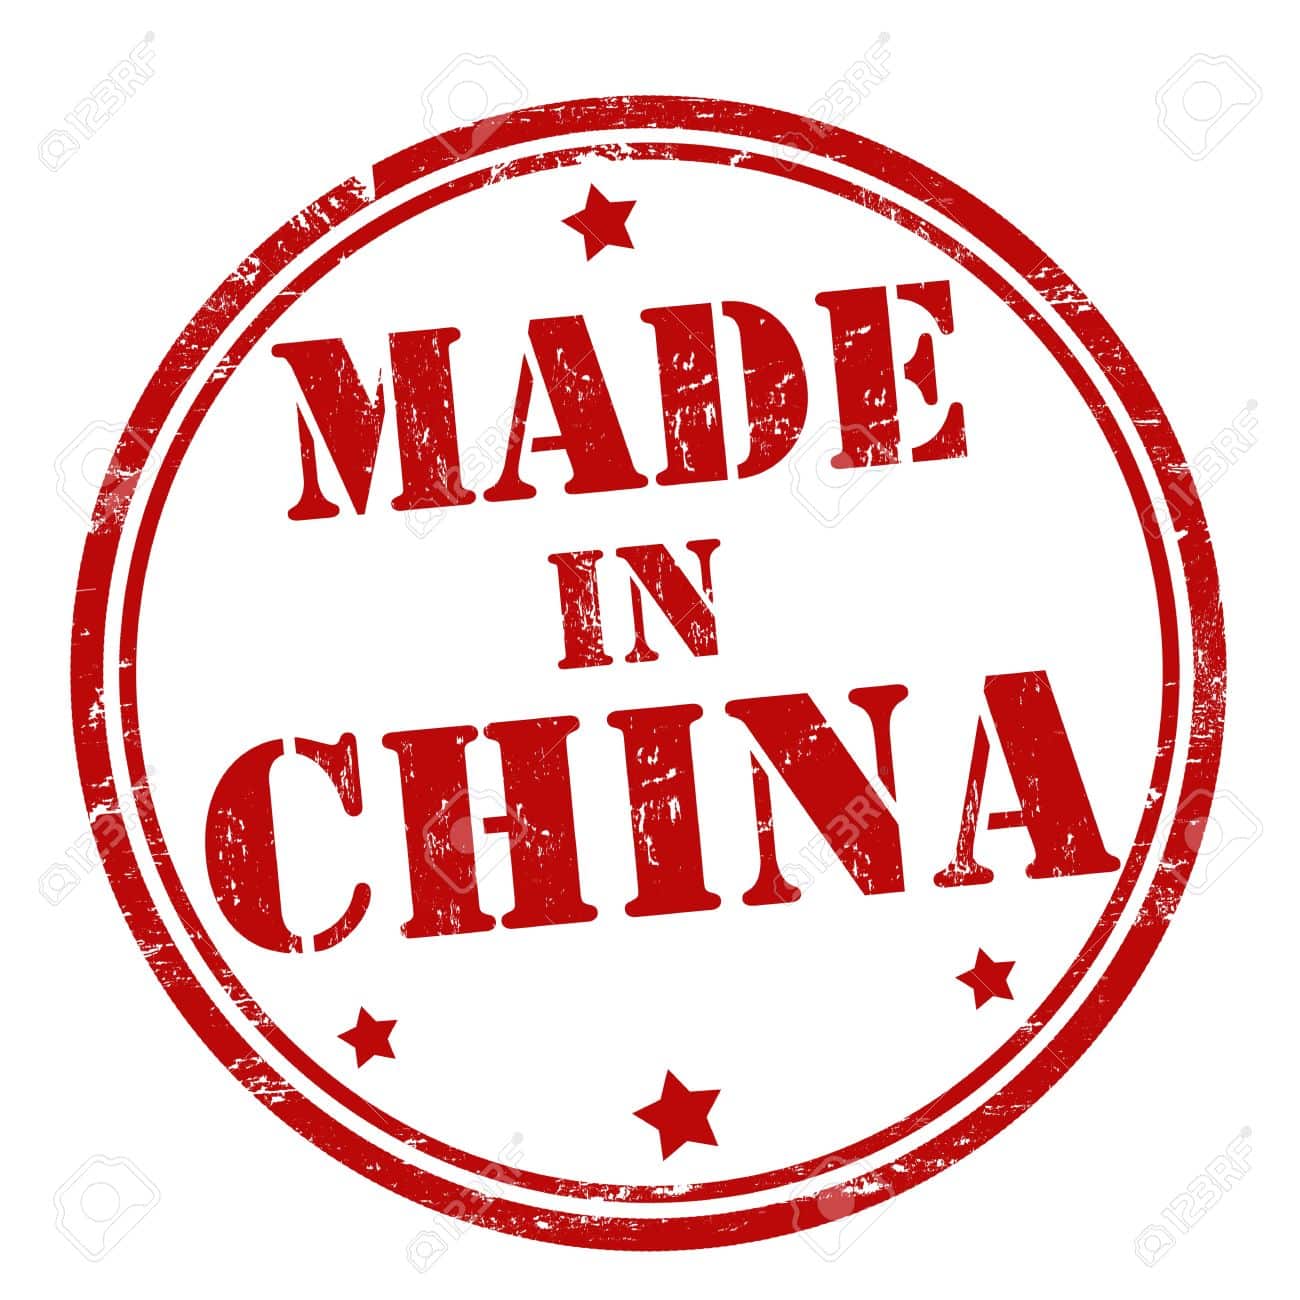 Made in china. Надпись made in China. Made in China этикетка. Мэйд ин чина. Made in China ярлык.